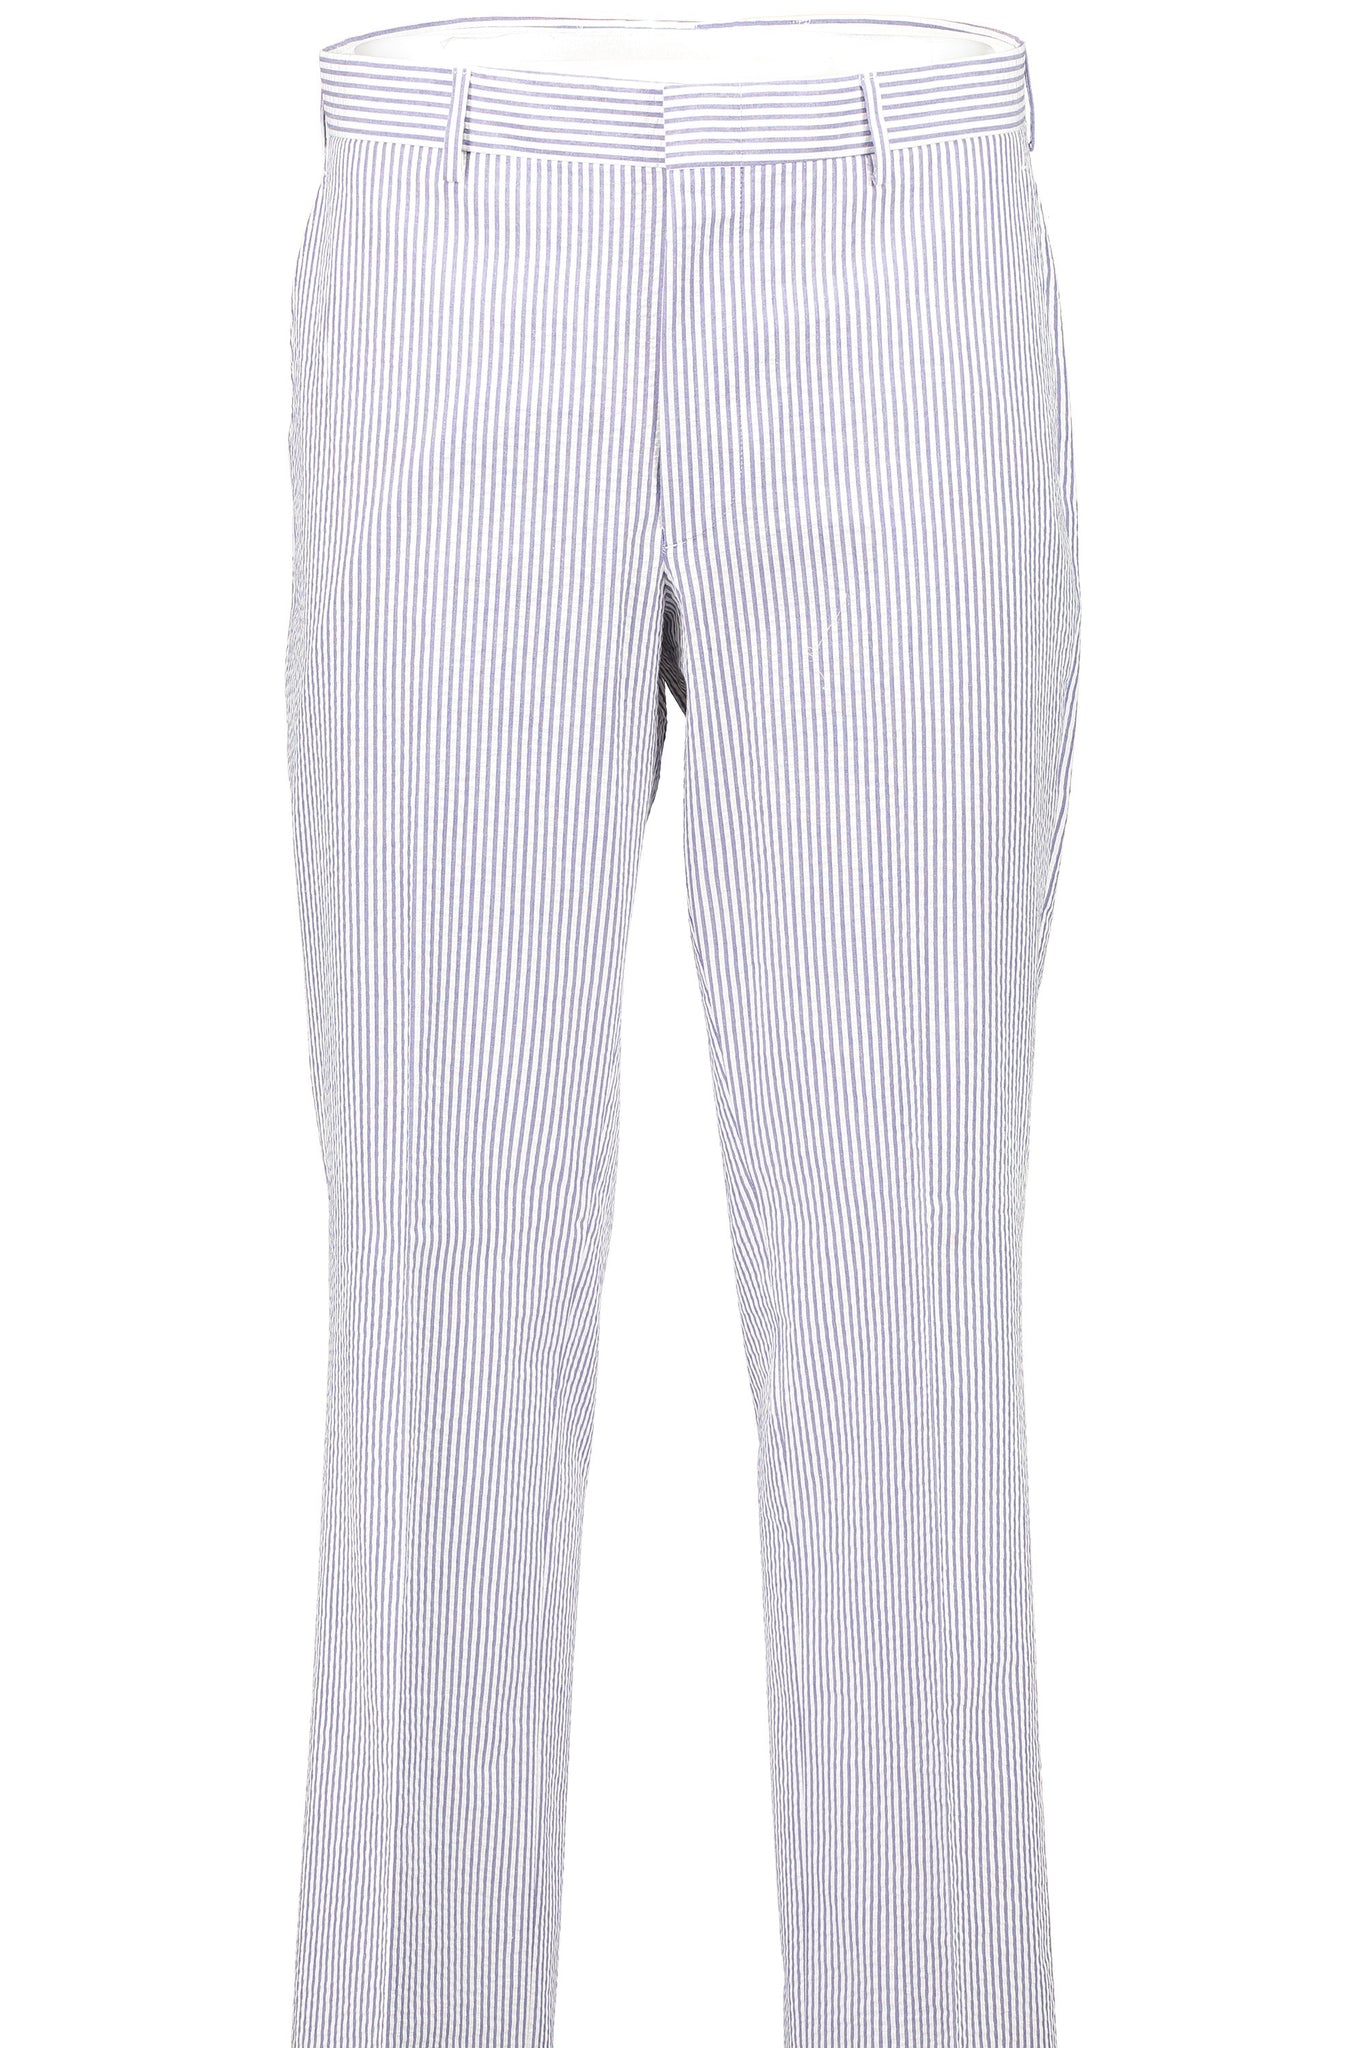 Classic Fit Seersucker Suit Separate Flat Front Pant -  Hardwick.com